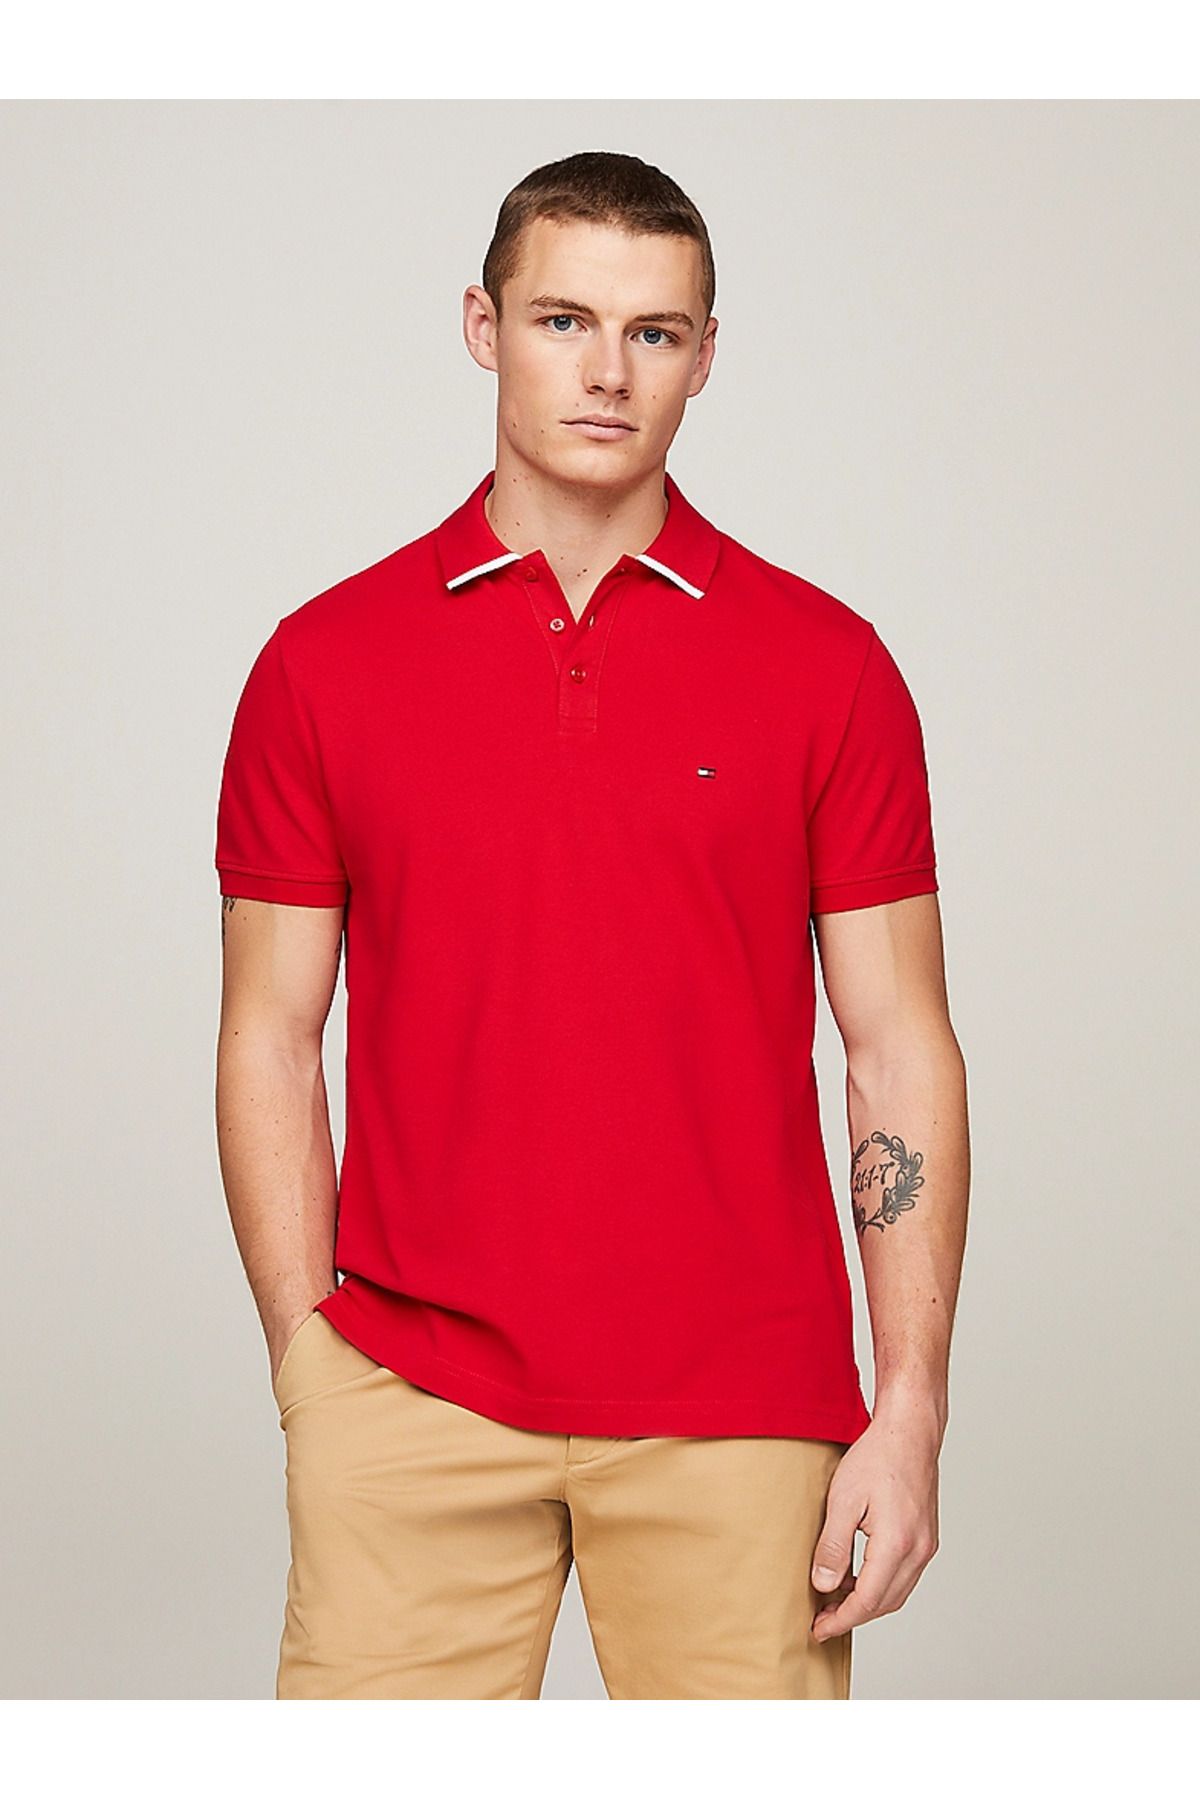 Tommy Hilfiger Erkek Logolu Polo Yakalı Kısa Kollu Düğmeli Kırmızı Polo Yaka T-Shirt MW0MW34754-XLG